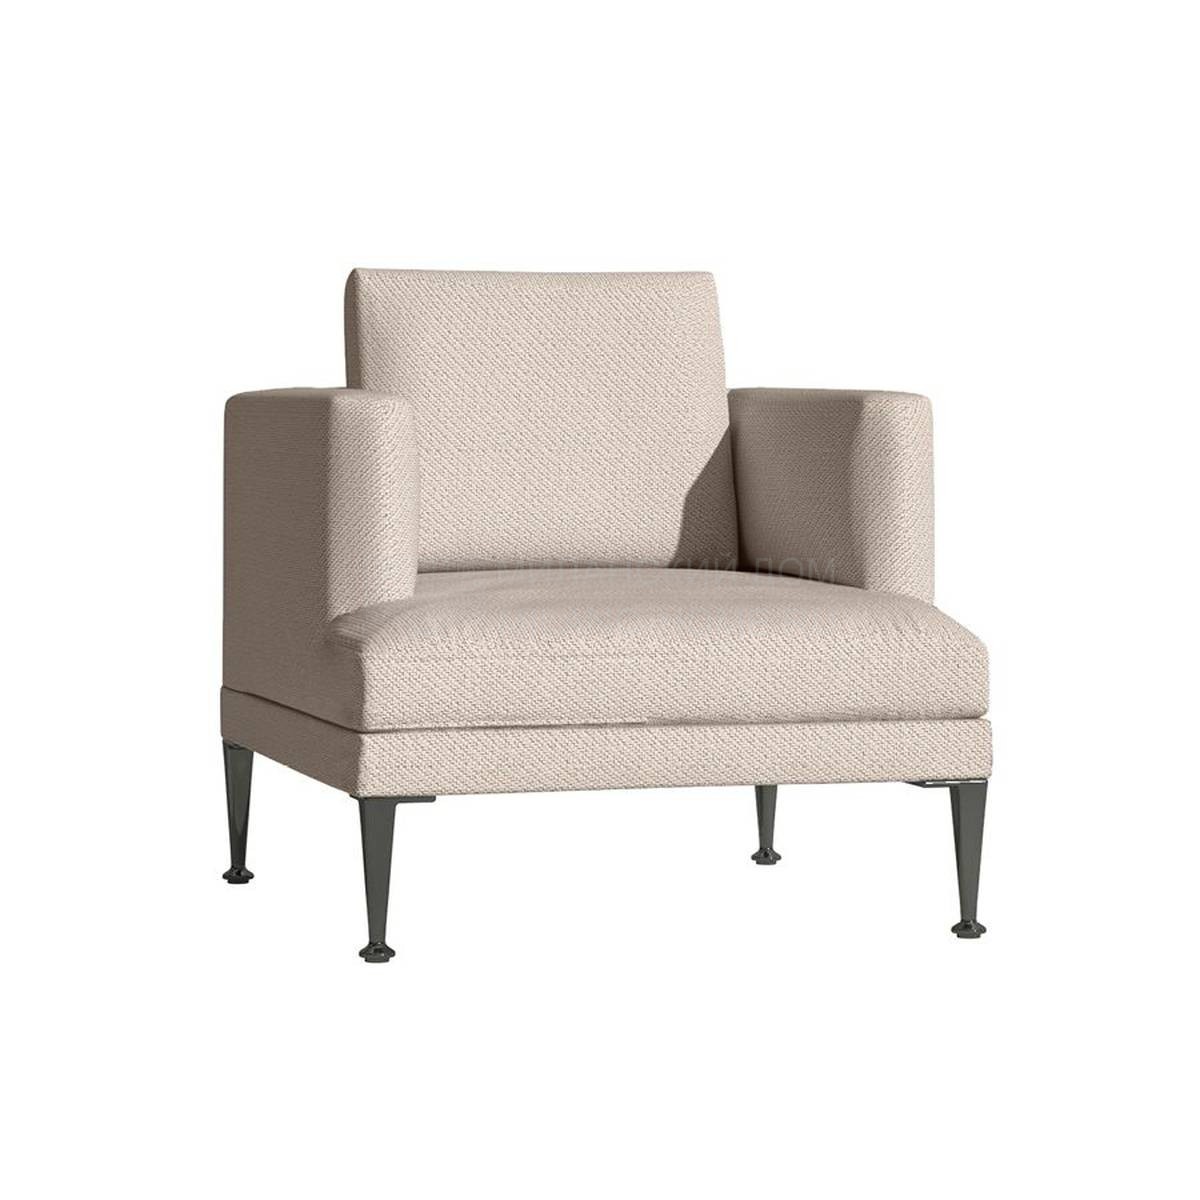 Кресло Lirica armchair из Италии фабрики DRIADE